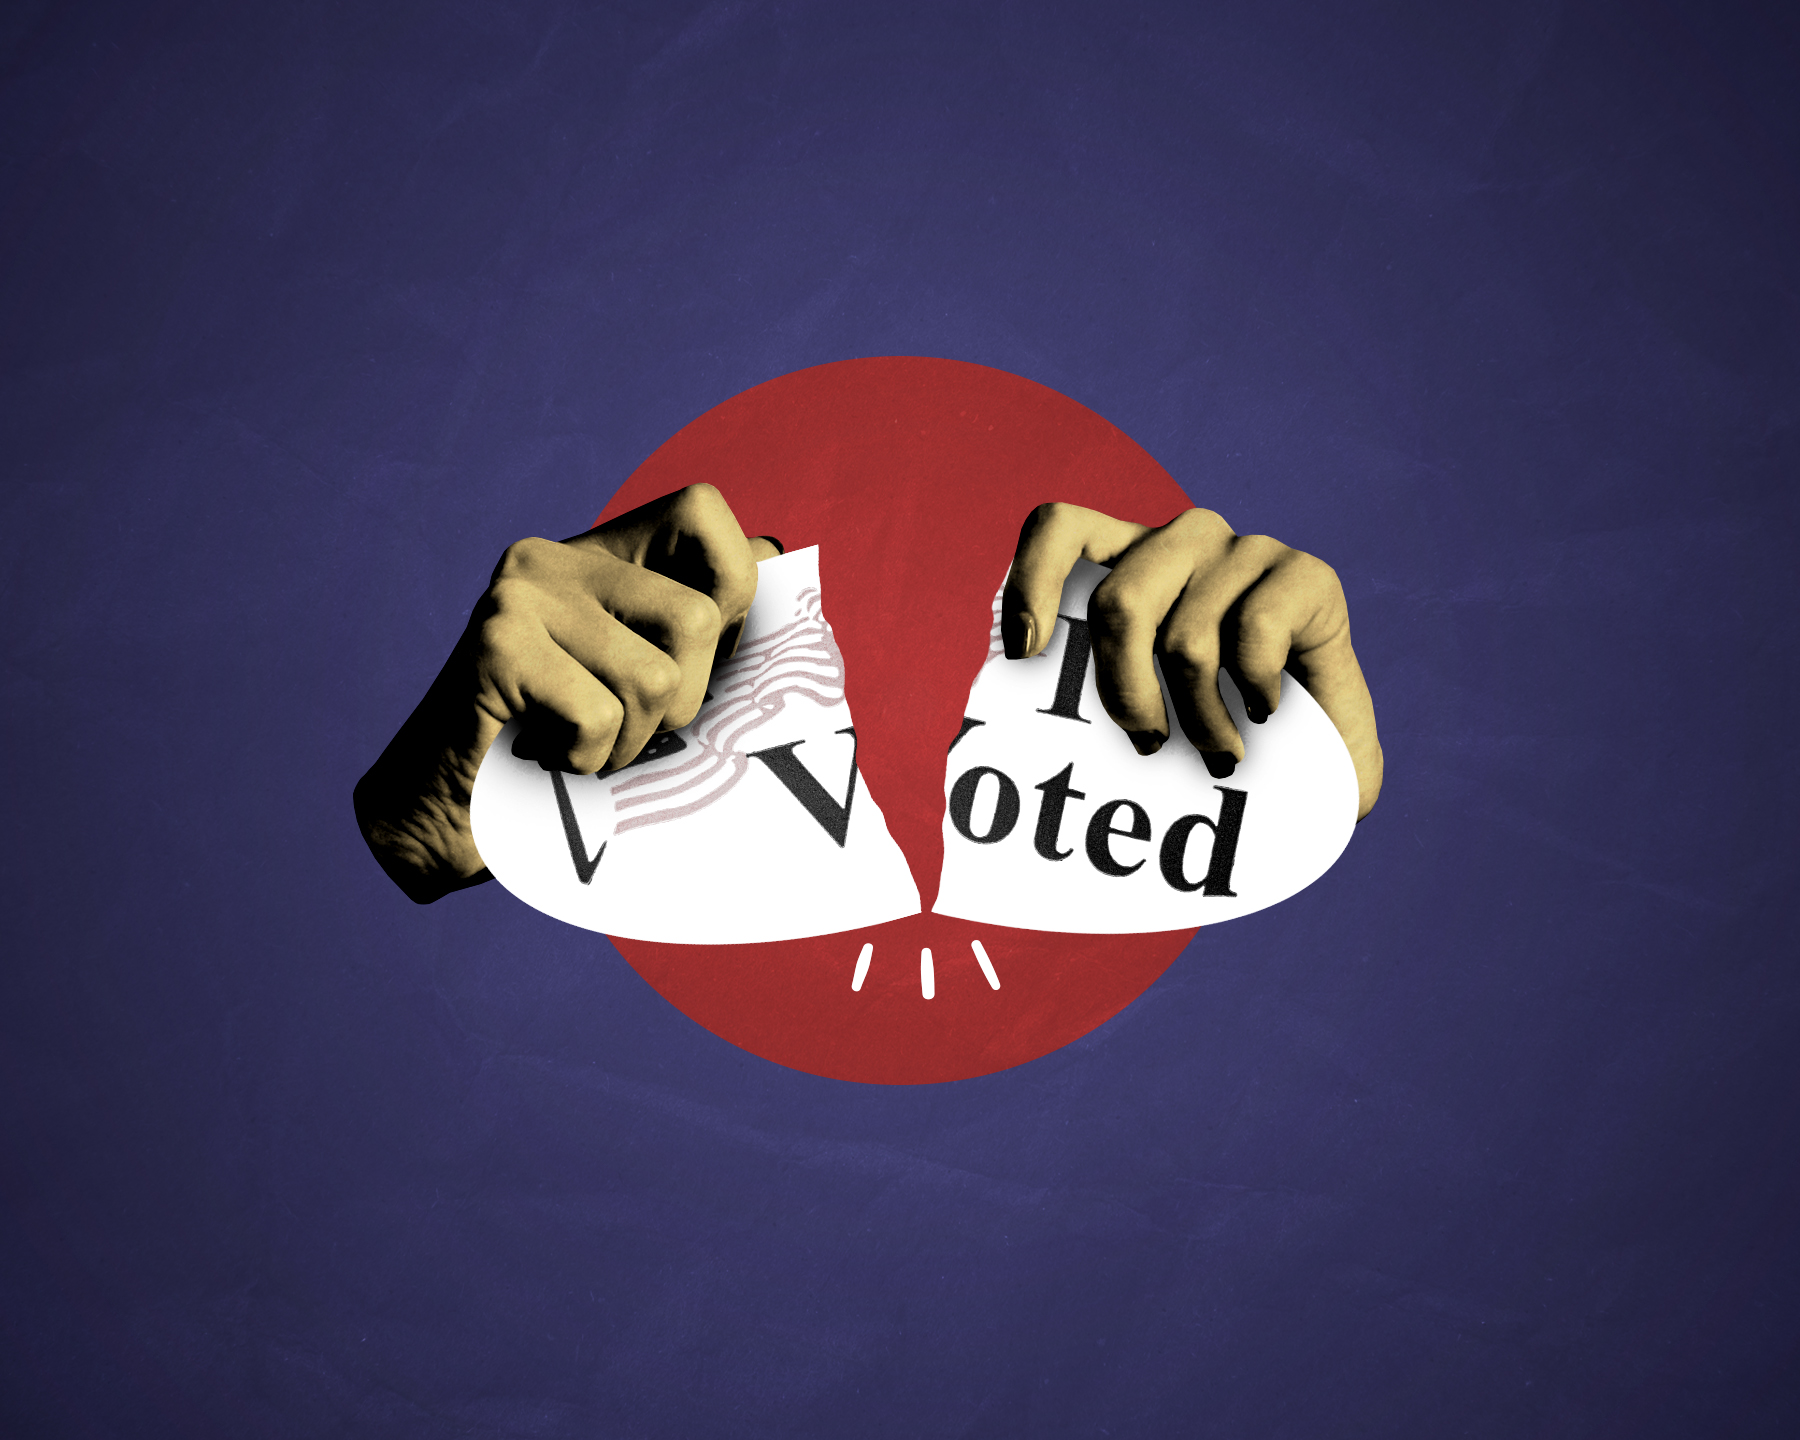 An I Voted sticker.